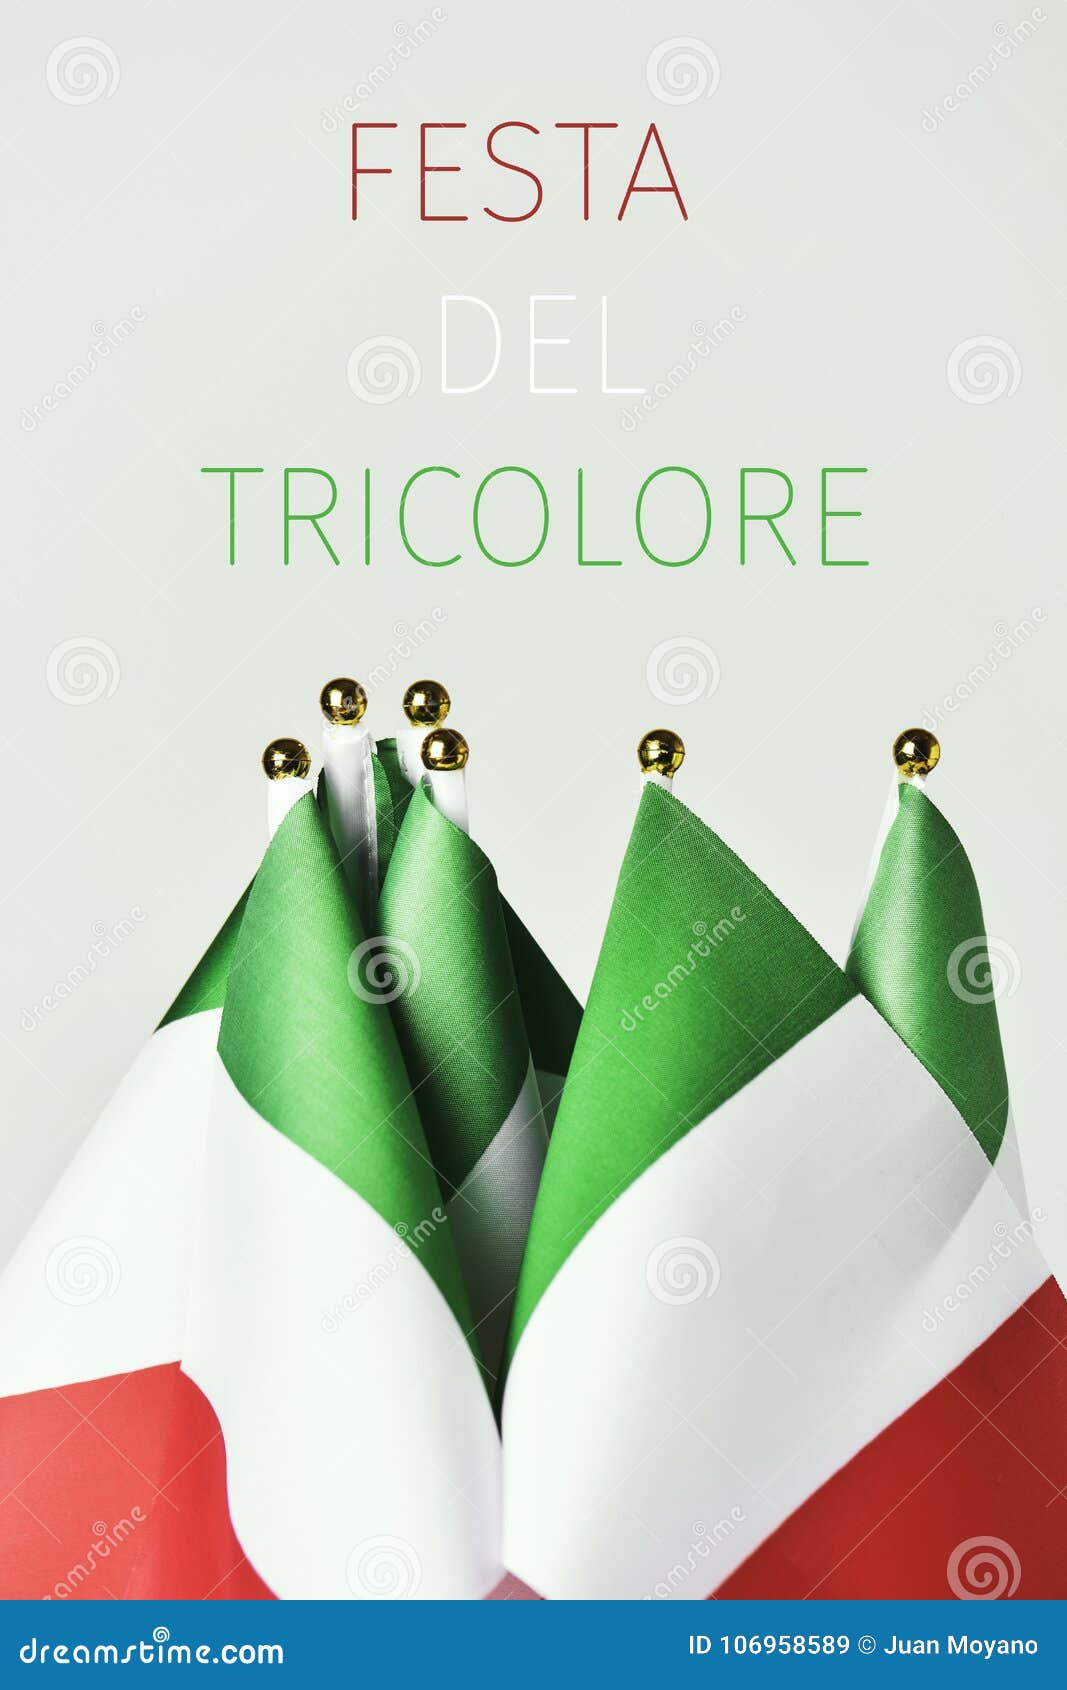 Festa Del Tricolore, the Day of the Italian Flag Stock Image - Image of